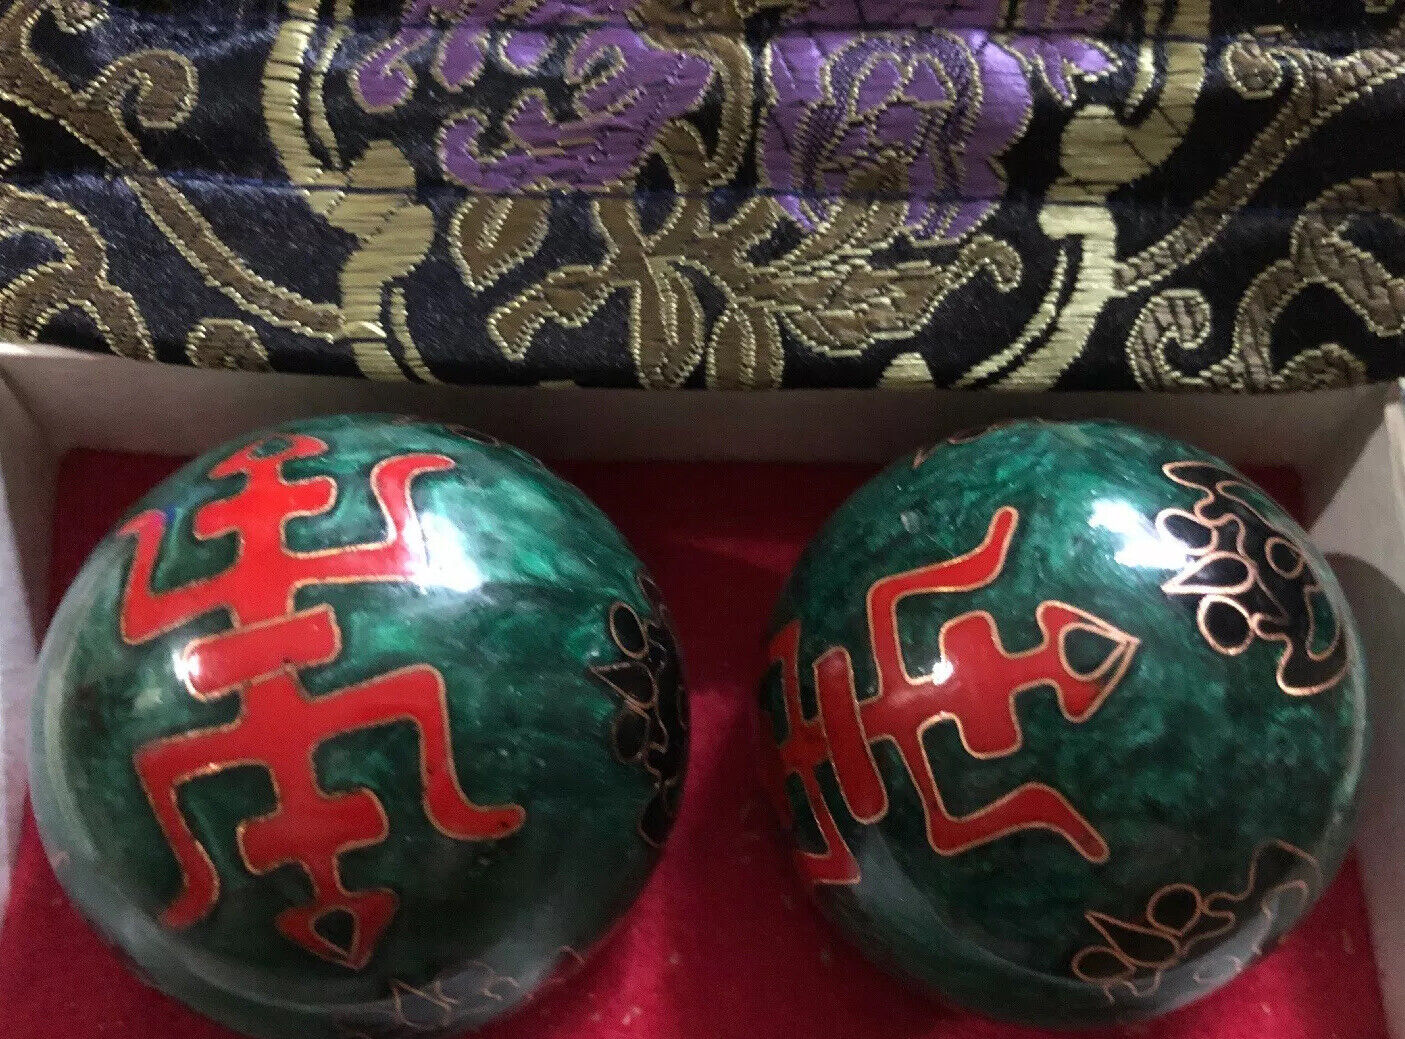 Chinese Cloisonne Health Exercise Stress Baoding Green/red Enamel Balls1.80” New